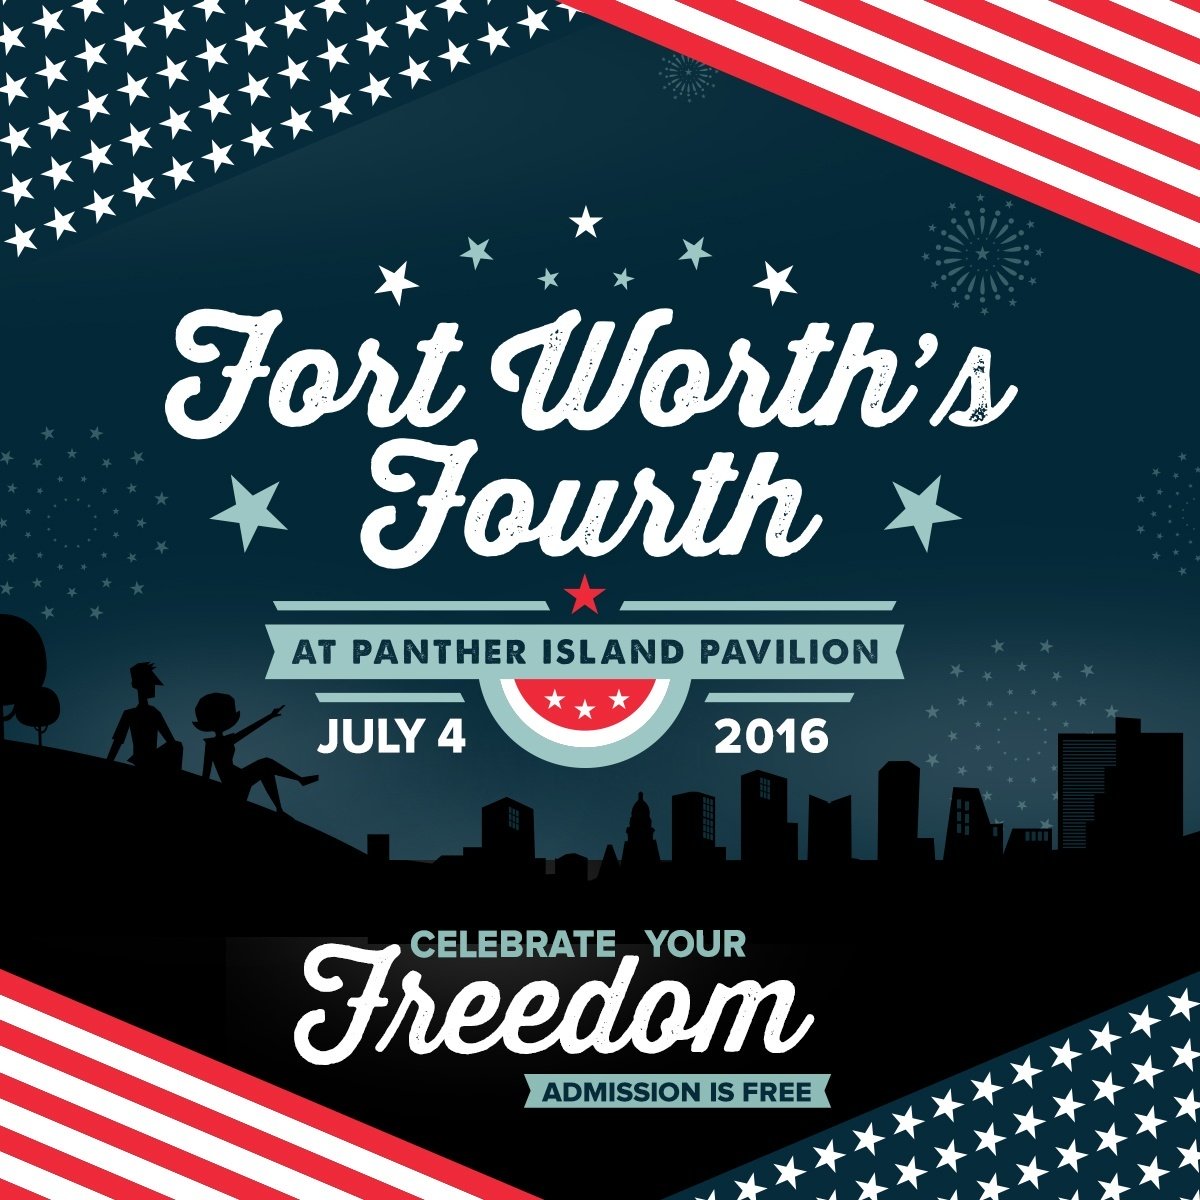 Fort Worth’s Fourth